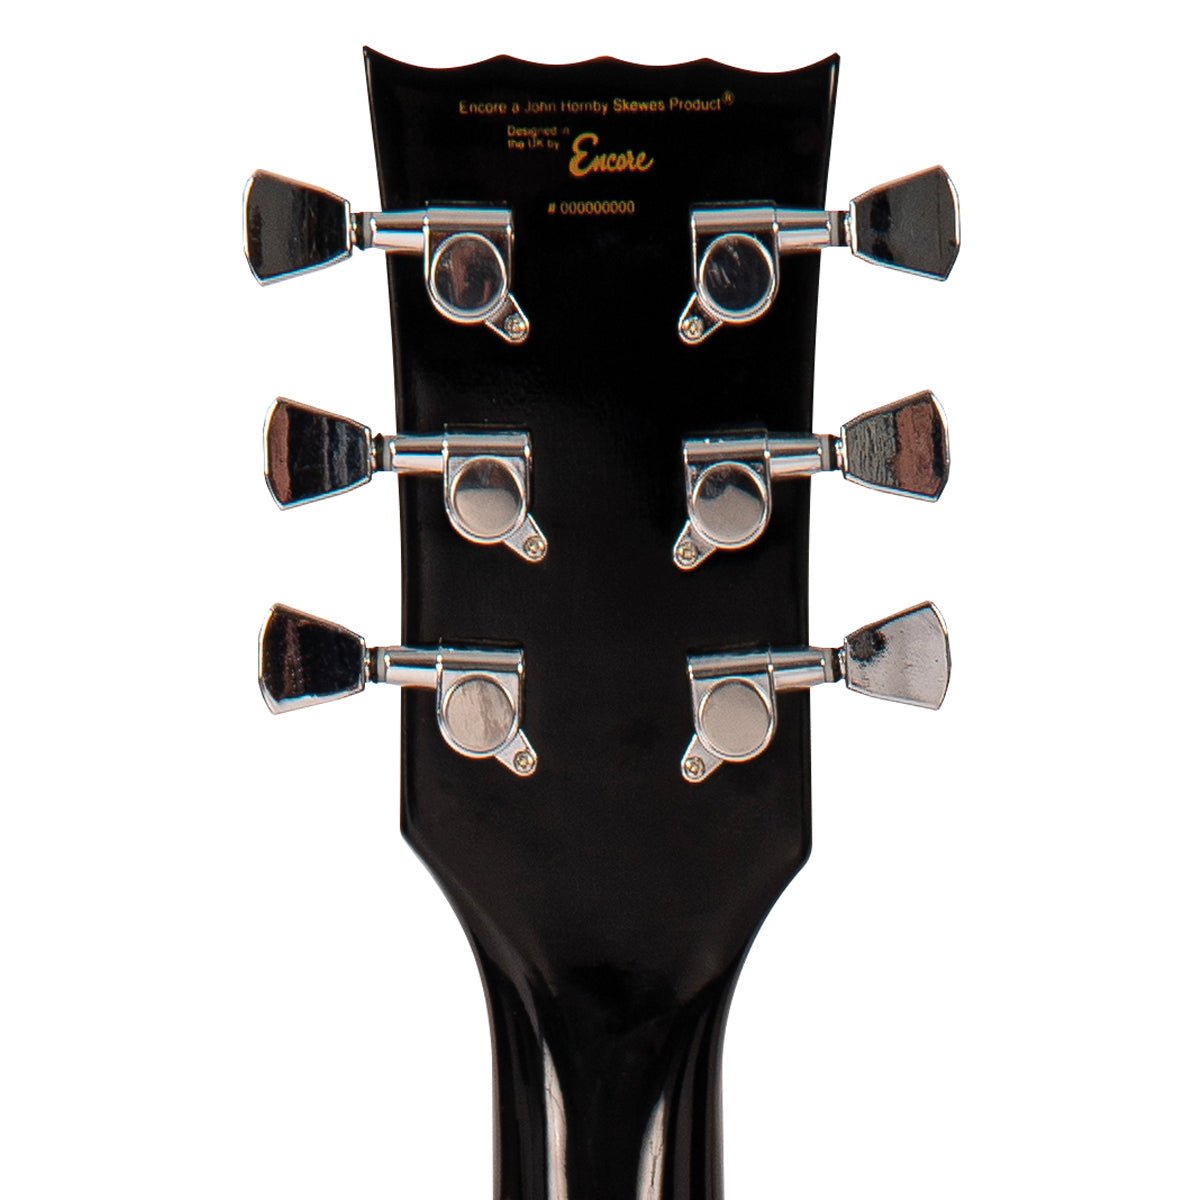 Encore Blaster E90 Electric Guitar ~ Gloss Black